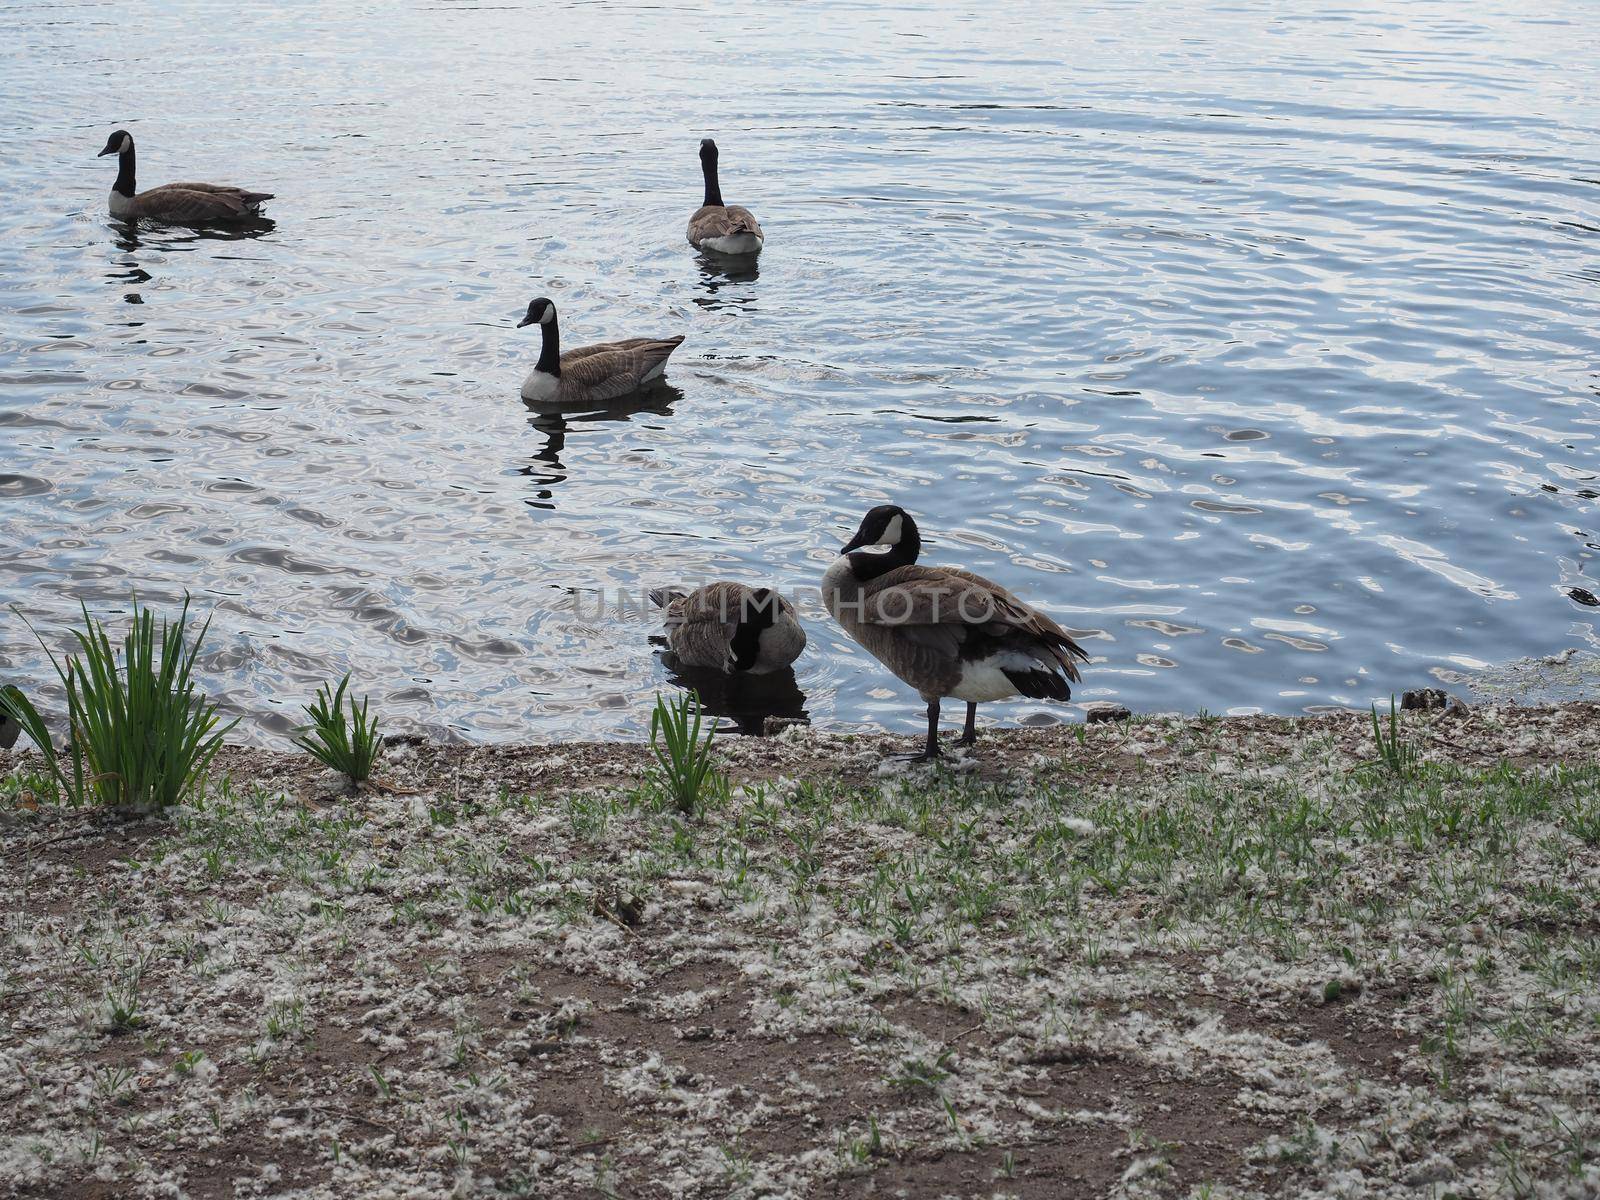 ducks in a pond by claudiodivizia